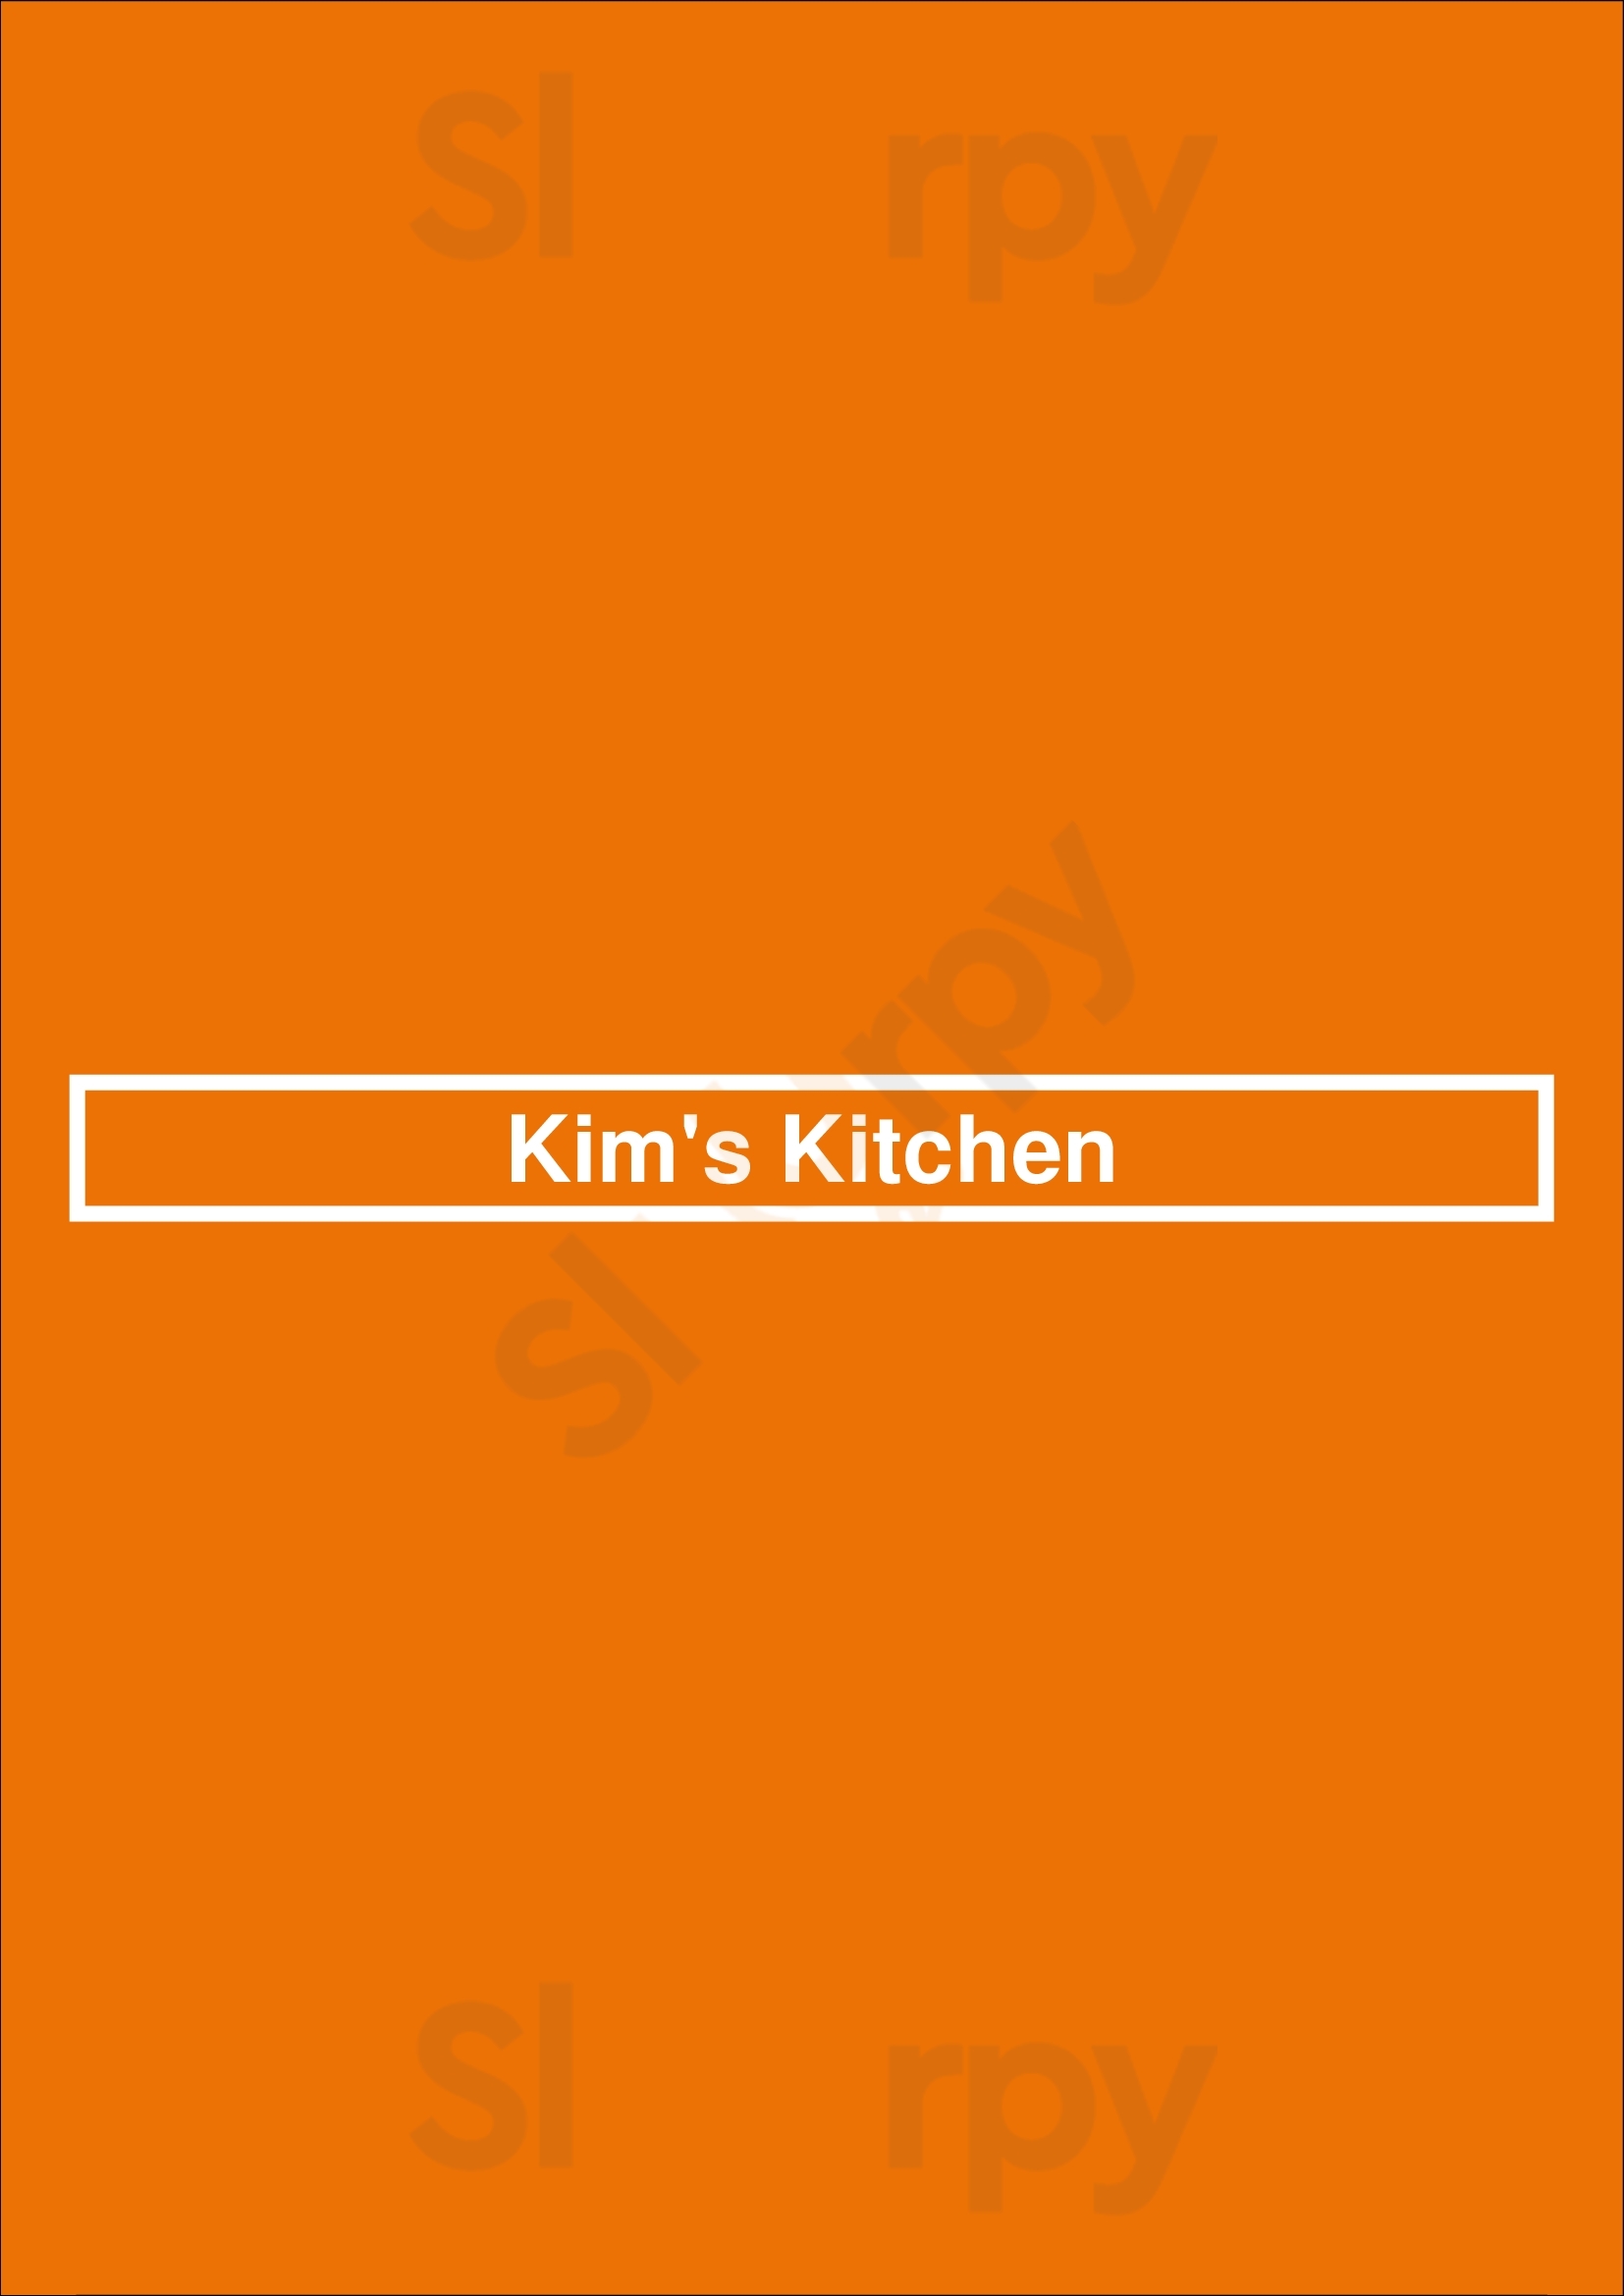 Kim's Kitchen Zaltbommel Menu - 1